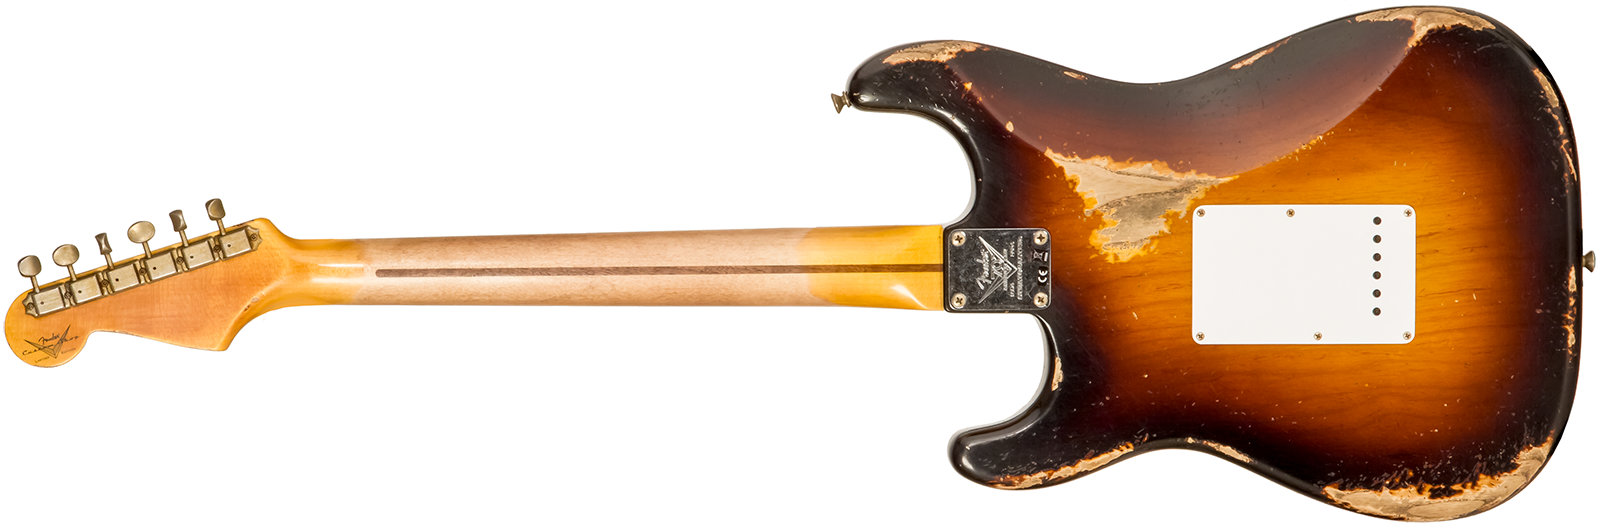 Fender Custom Shop Strat 1954 70th Anniv. 3s Trem Mn #xn4324 - Heavy Relic Wide Fade 2-color Sunburst - Guitare Électrique Forme Str - Variation 1